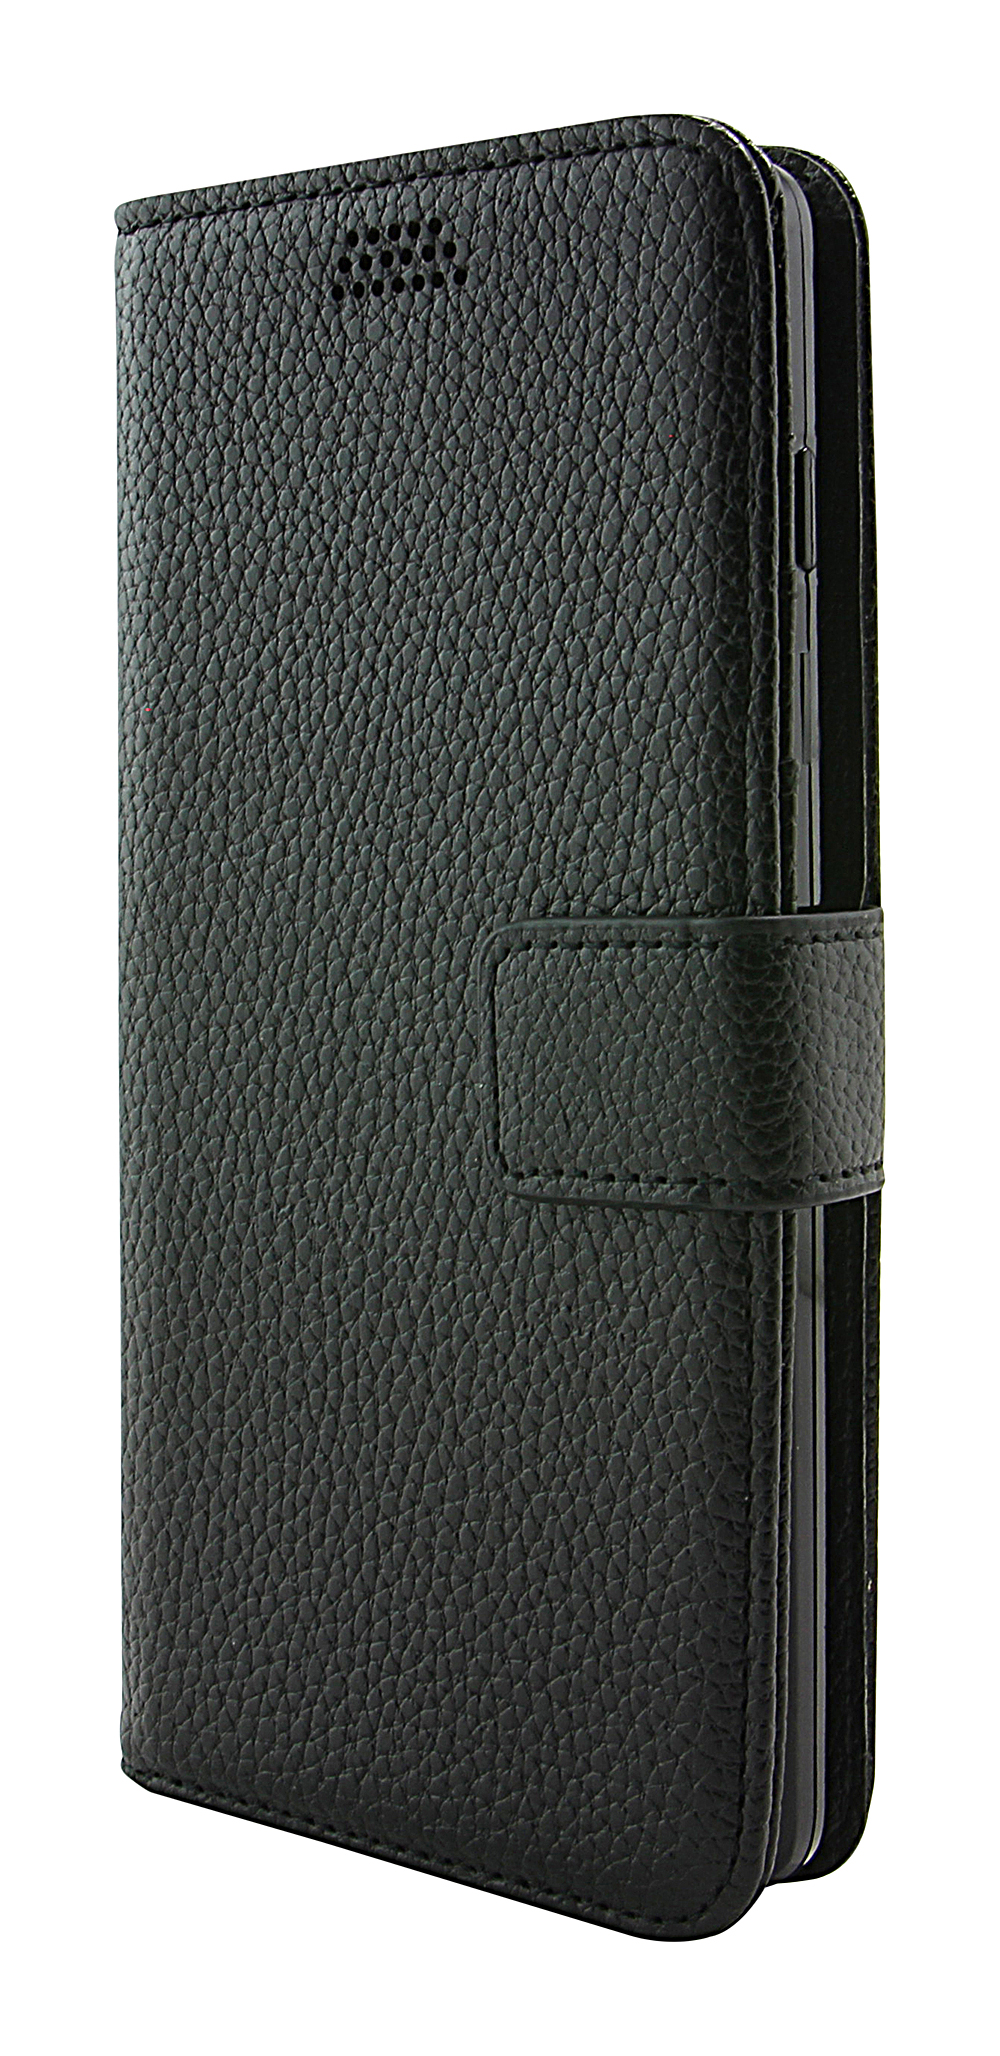 New Standcase Wallet Nokia 3.2